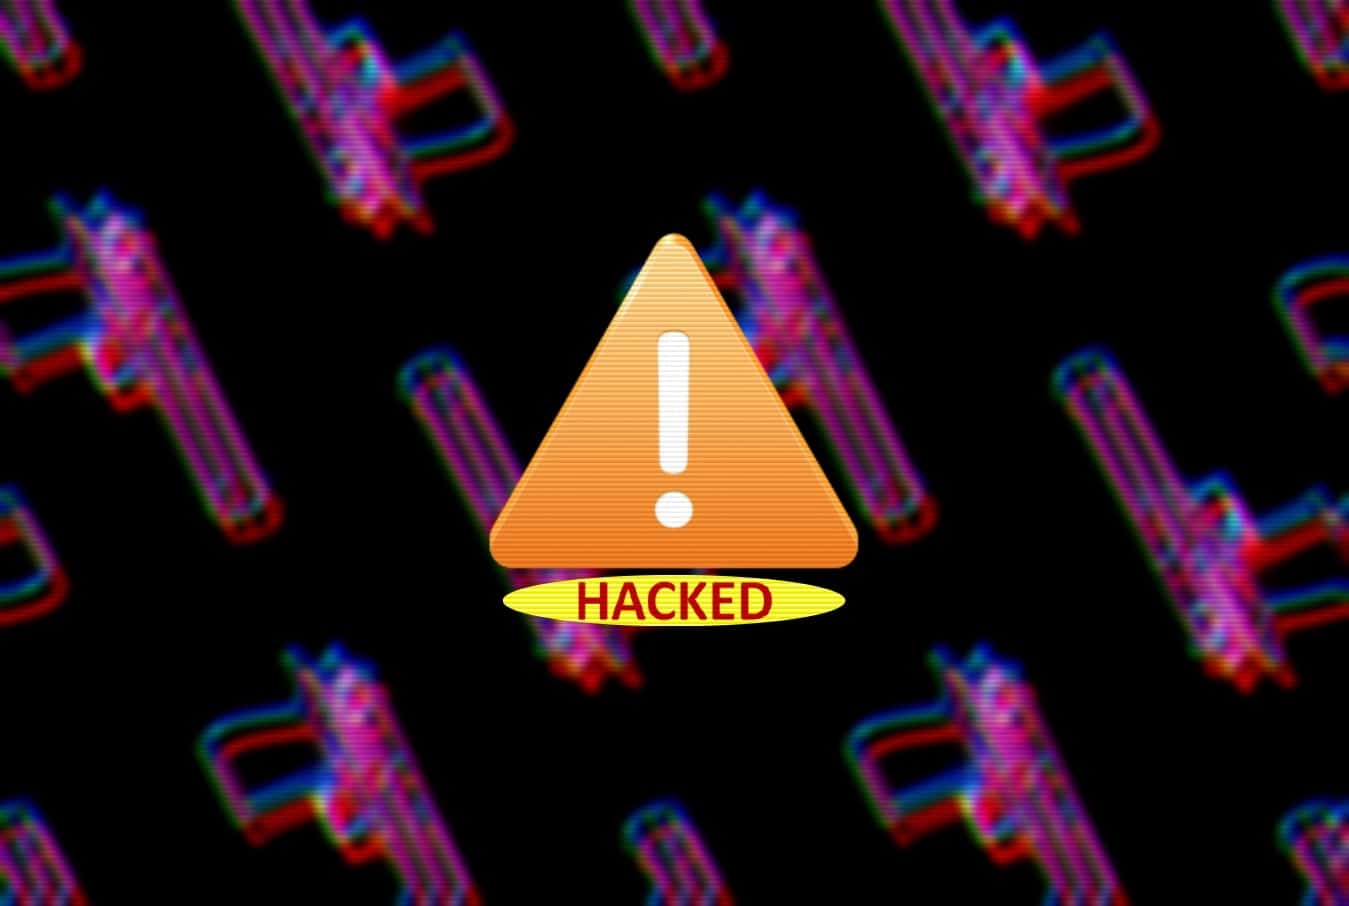 Guns.com hacked database leaked on hacker forum